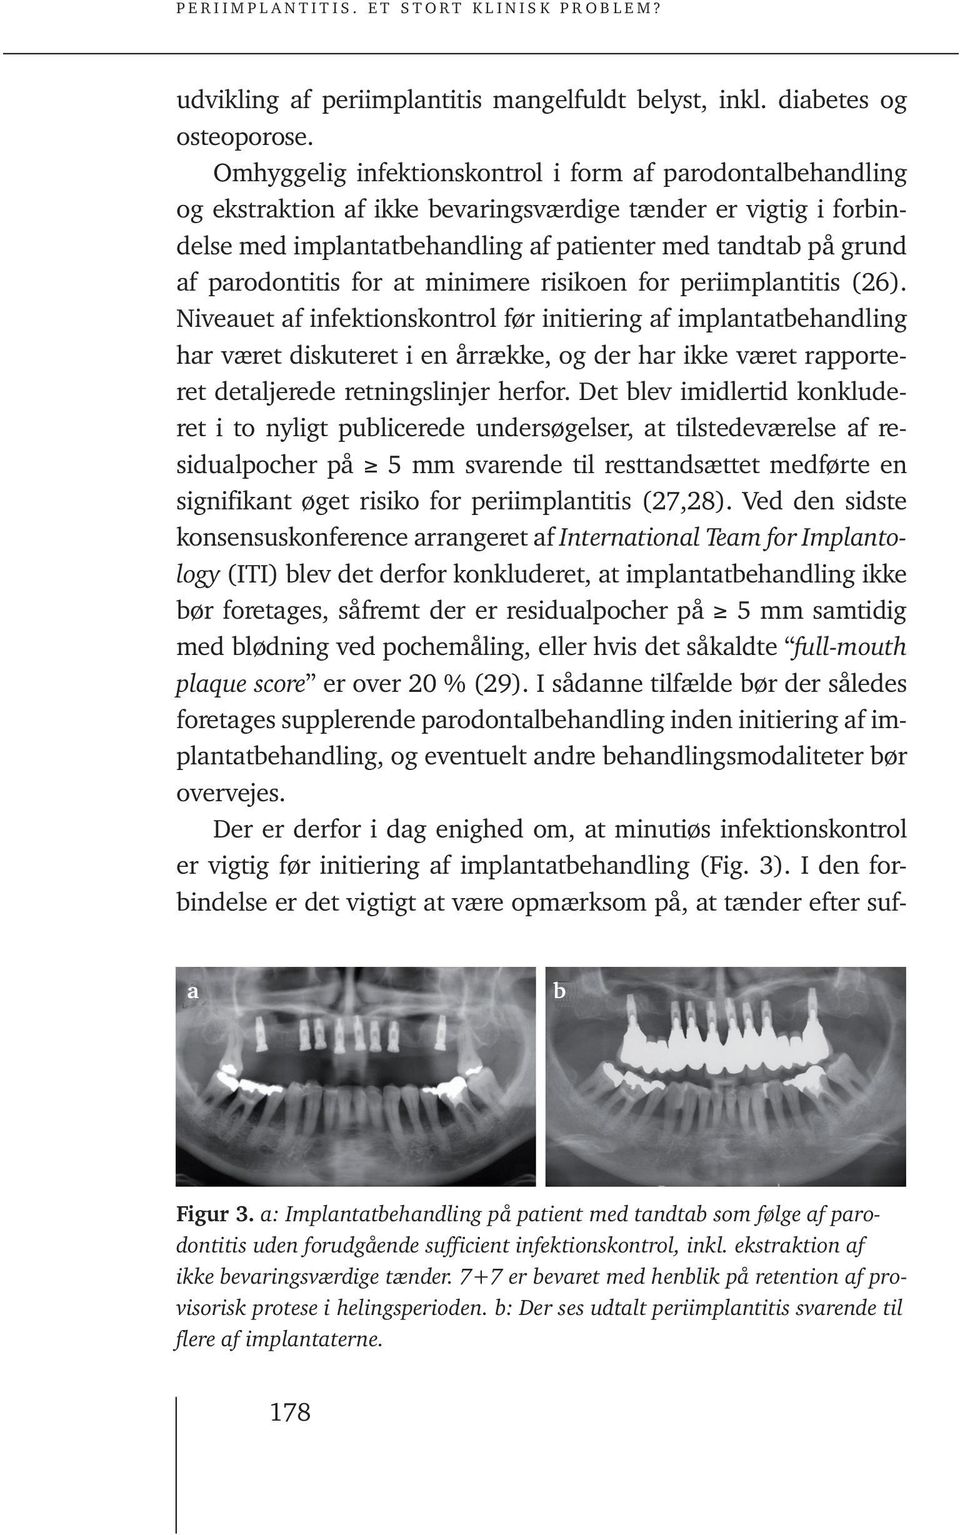 parodontitis for at minimere risikoen for periimplantitis (26).